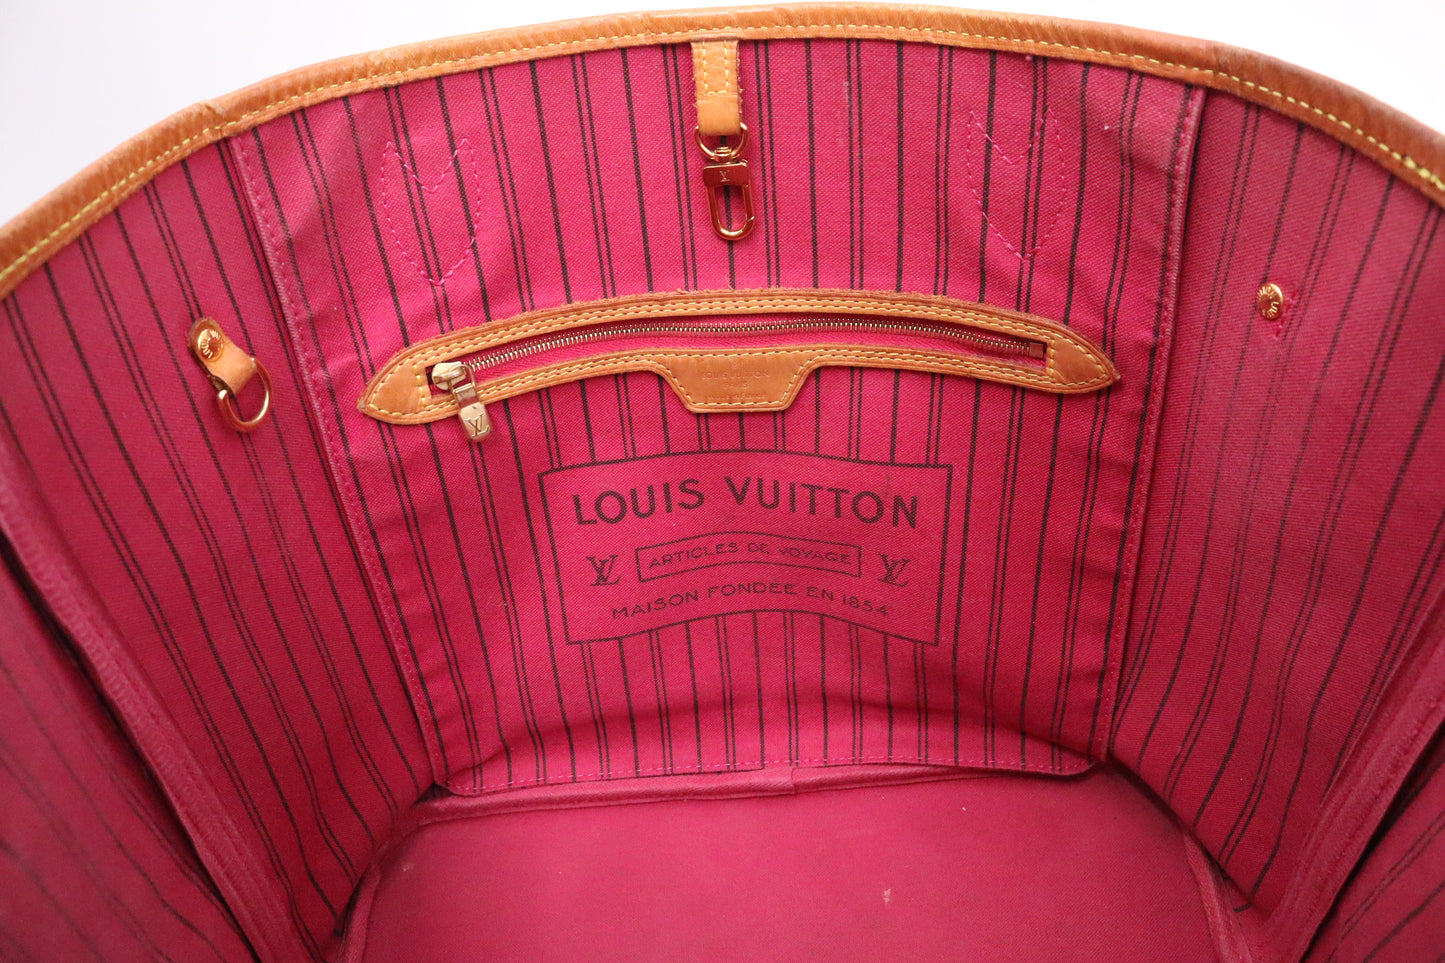 Louis Vuitton Neverfull MM in Monogram Canvas